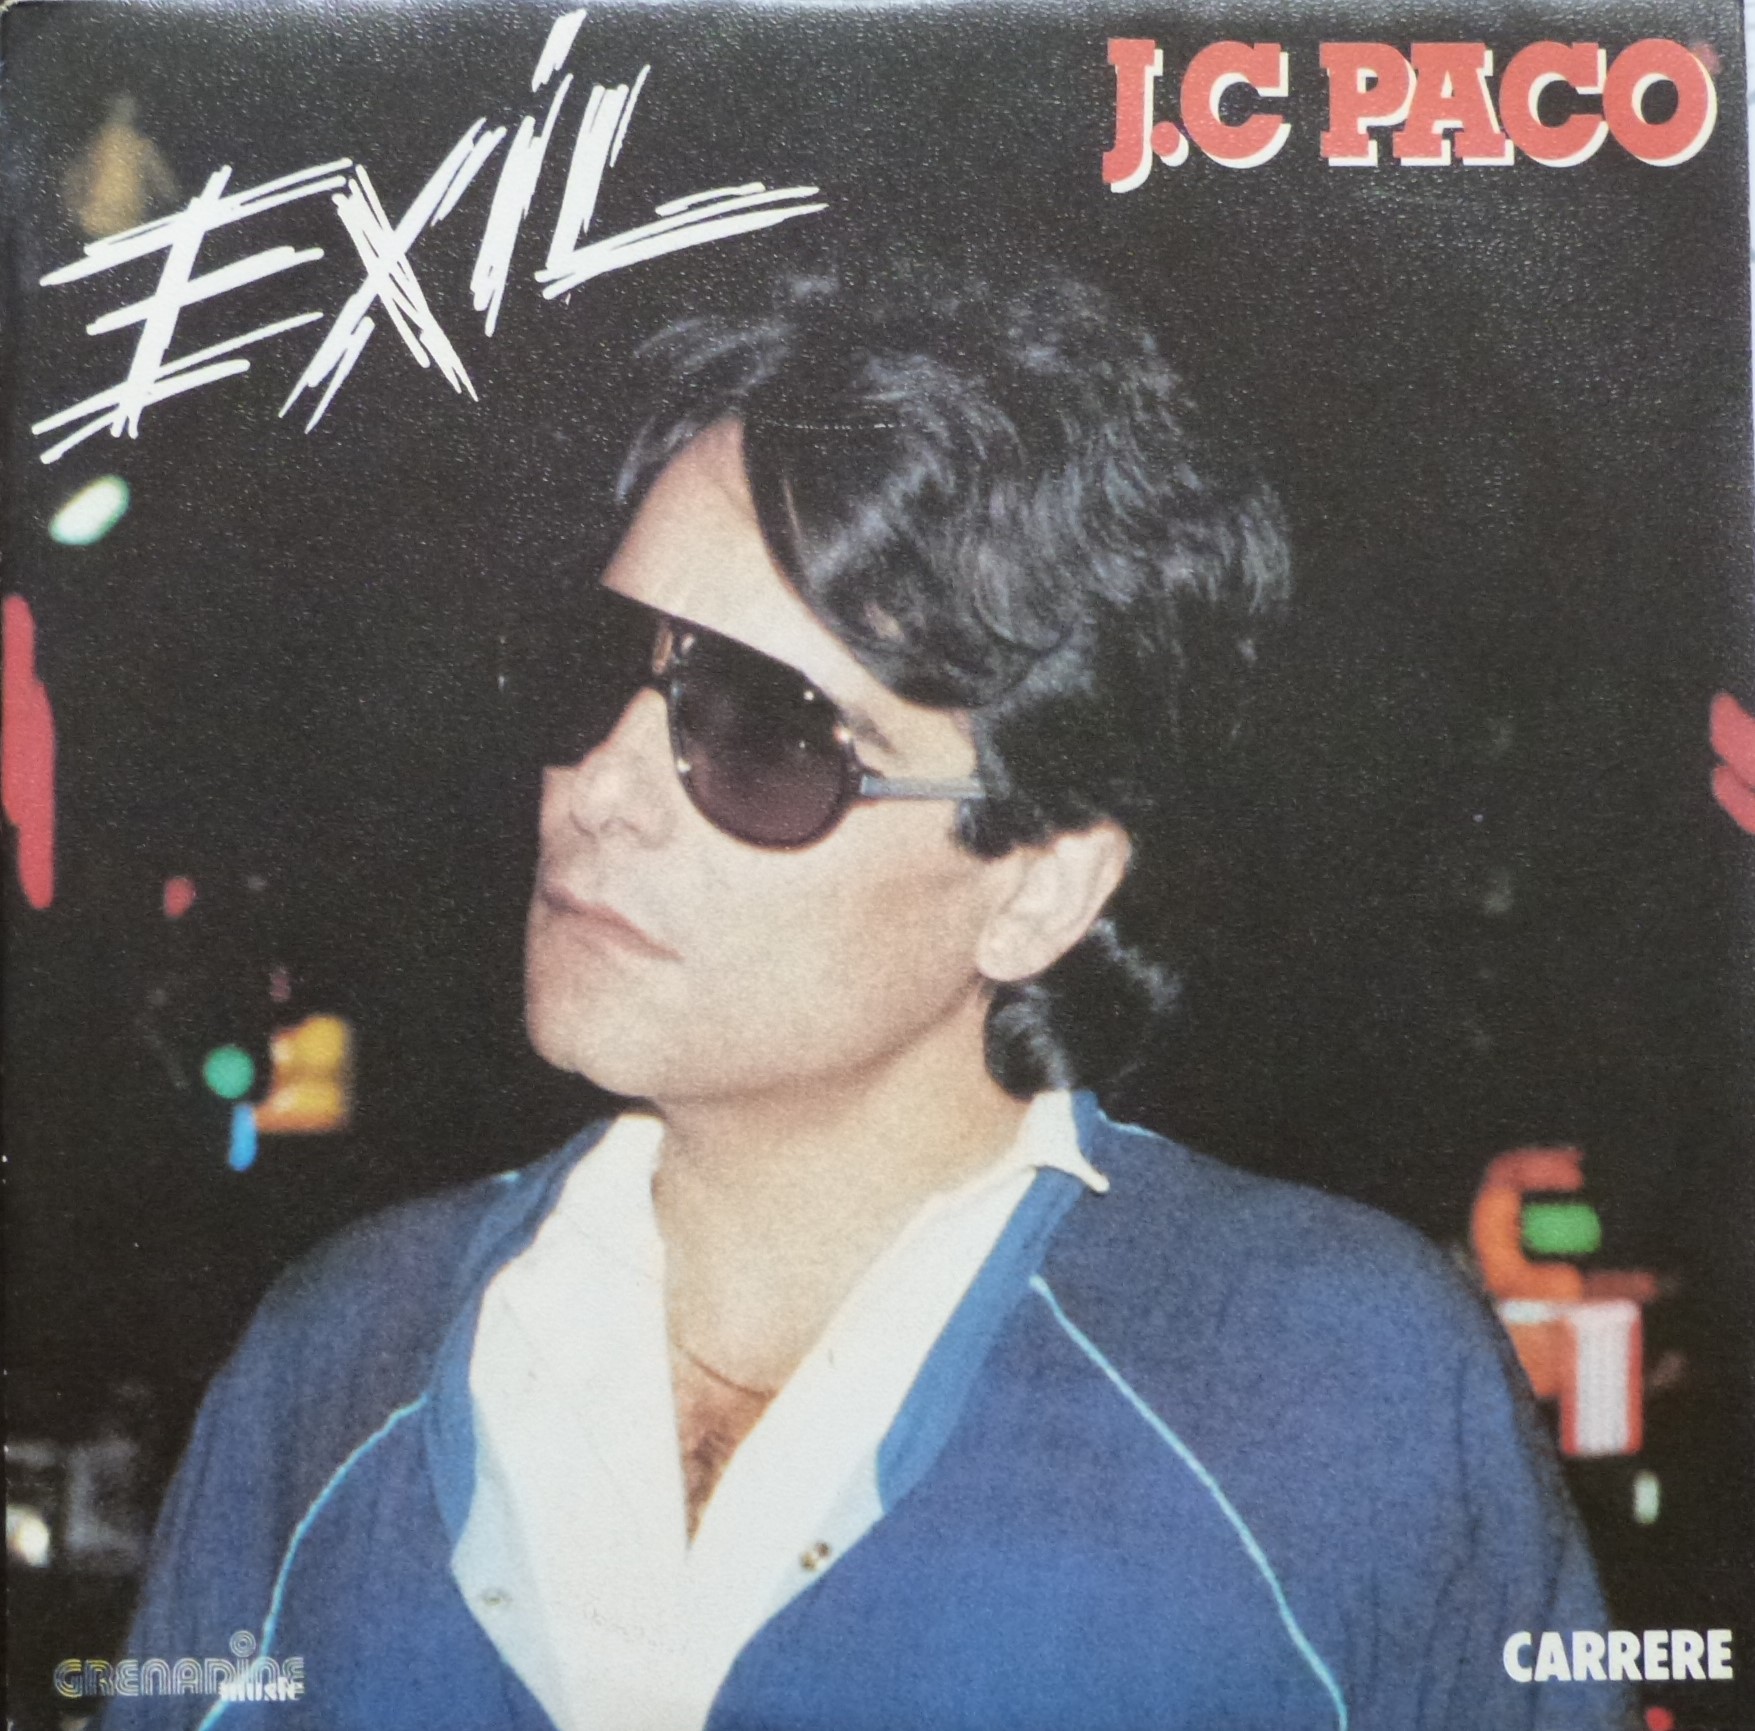 JC Paco Exil